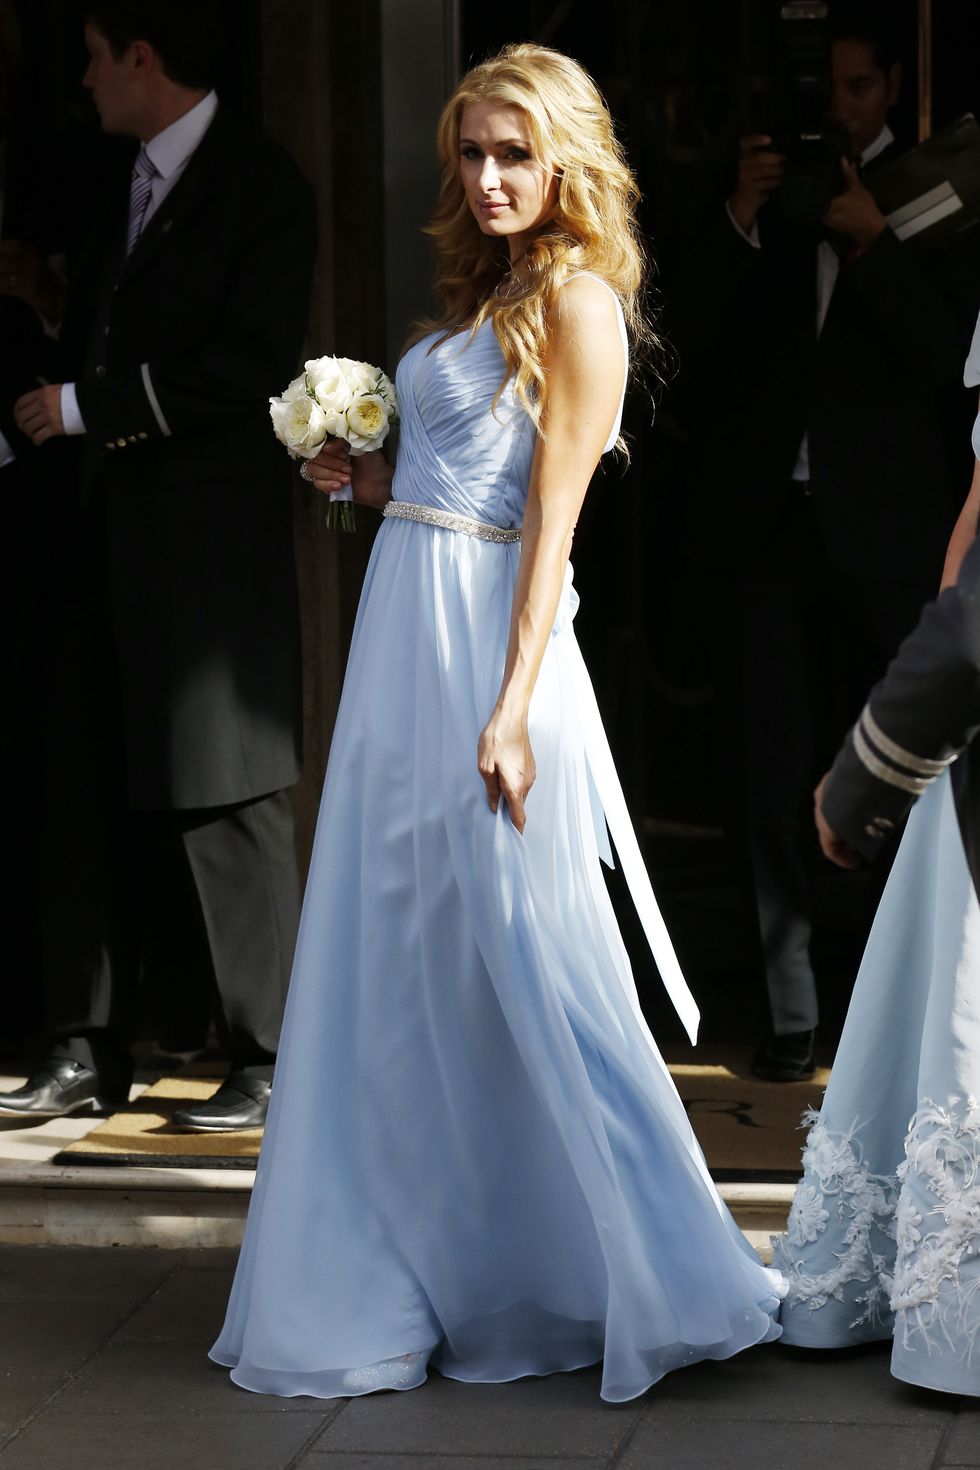 Paris Hilton as a bridesmaid at Nicky Hilton's wedding